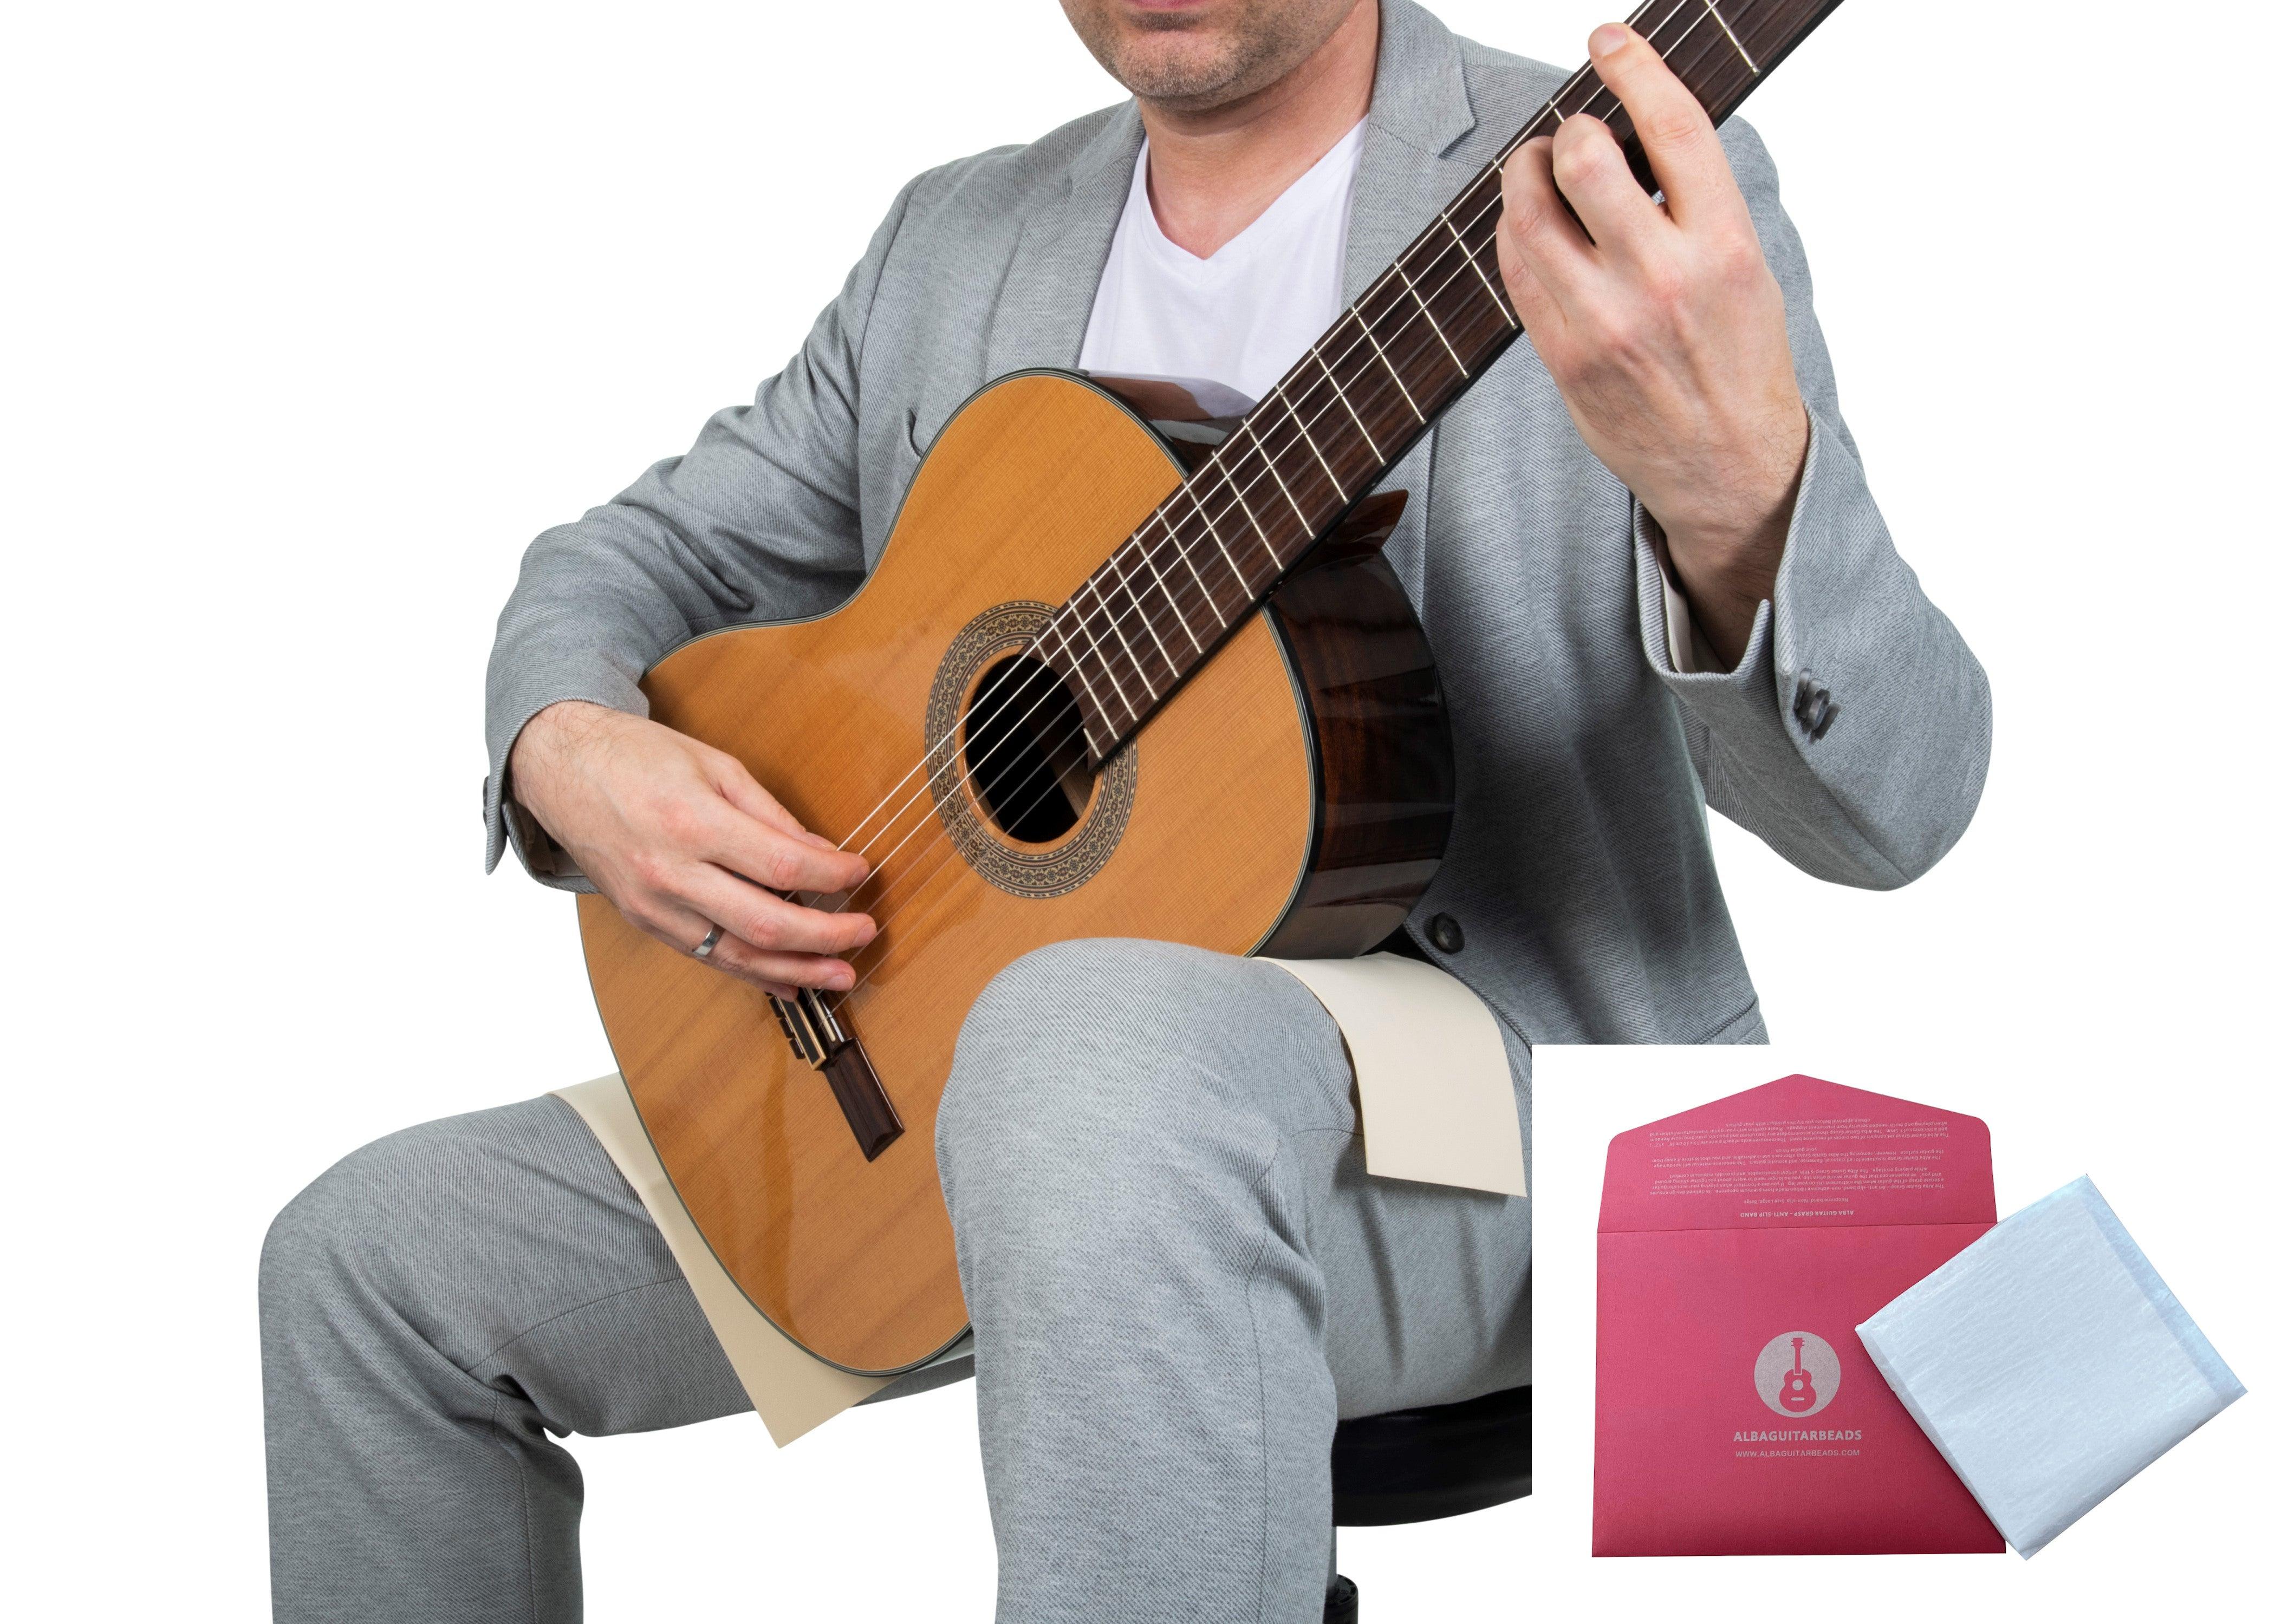 Gitano Appui-guitare - accessoires guitare classique - bauer musique